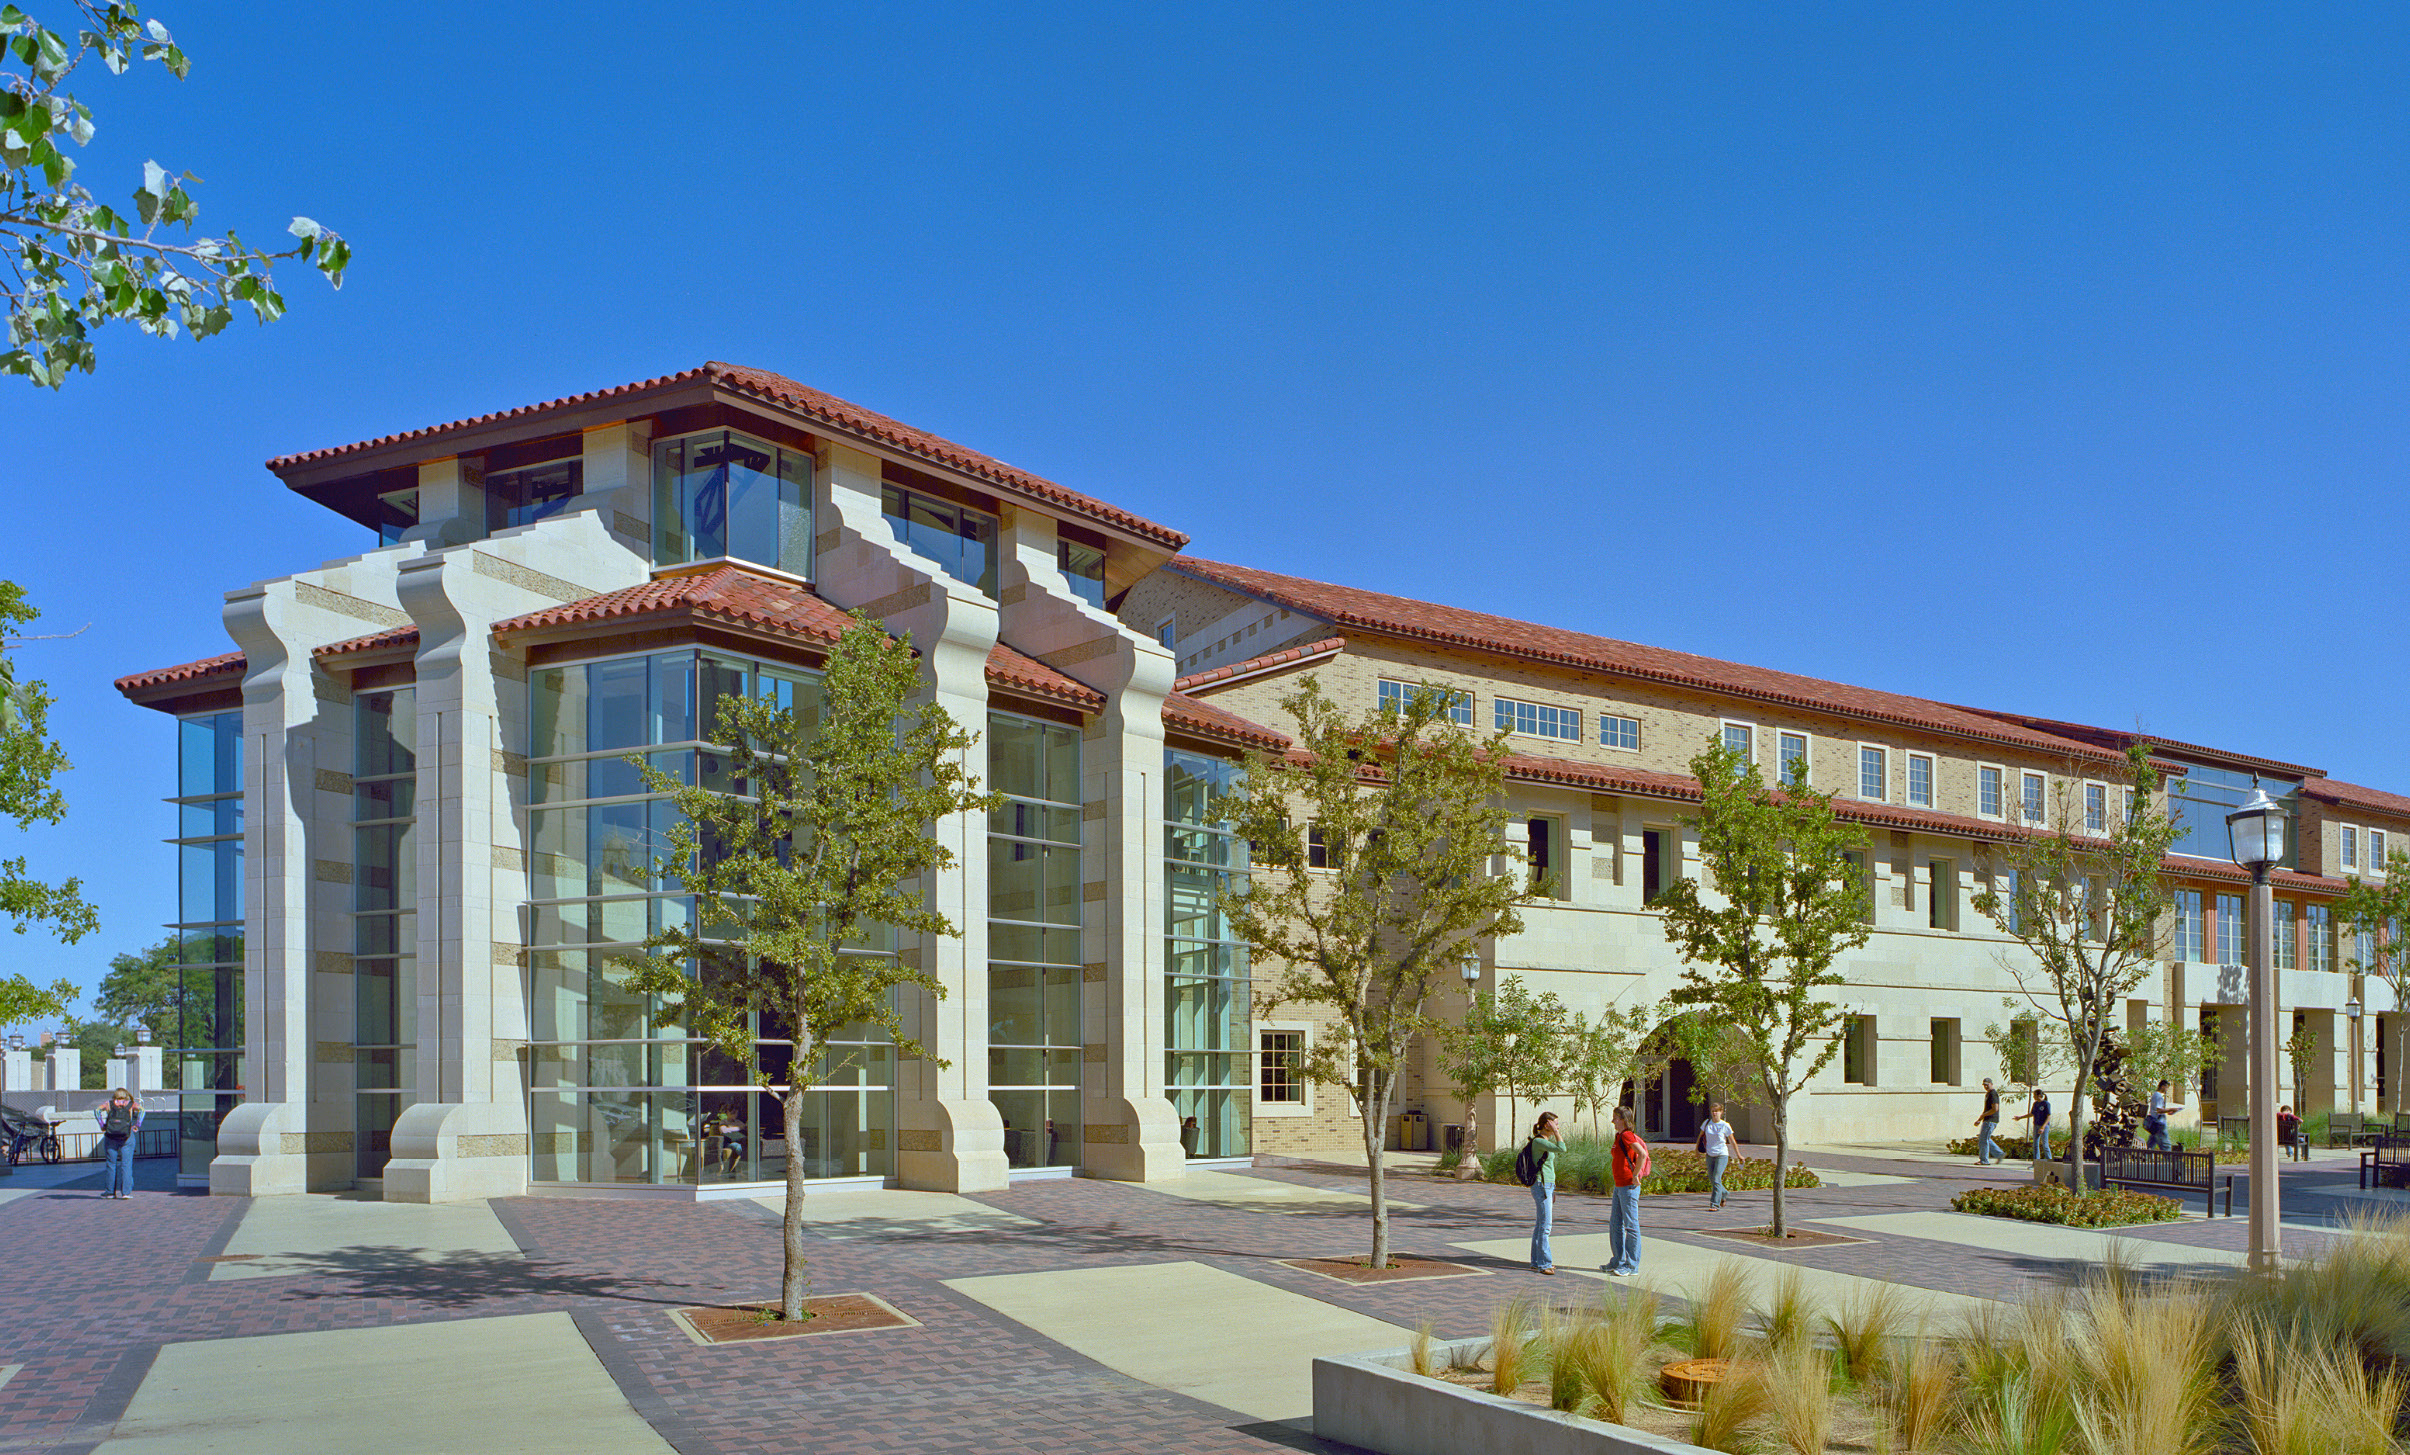 Texas Tech University Student Union 
Building - Lubbock, TX